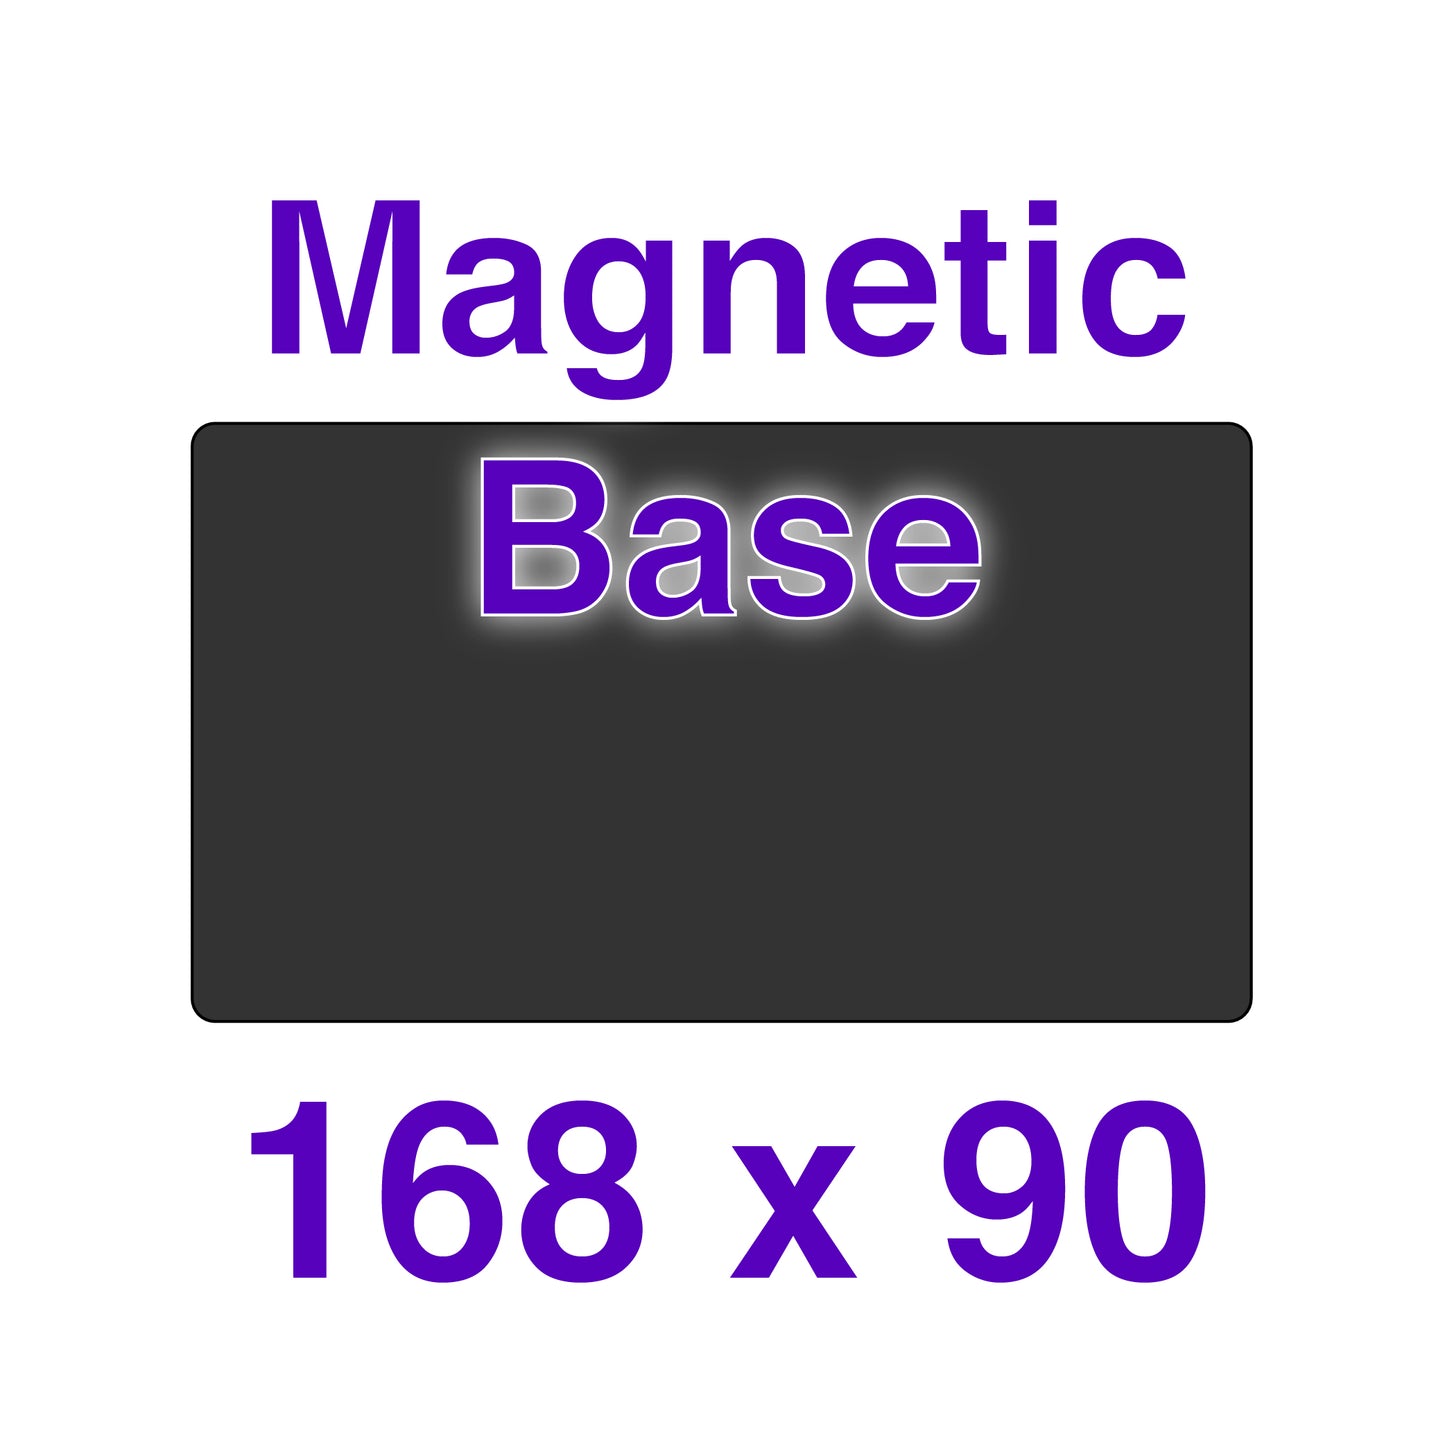 Magnetic Base - 168 x 90